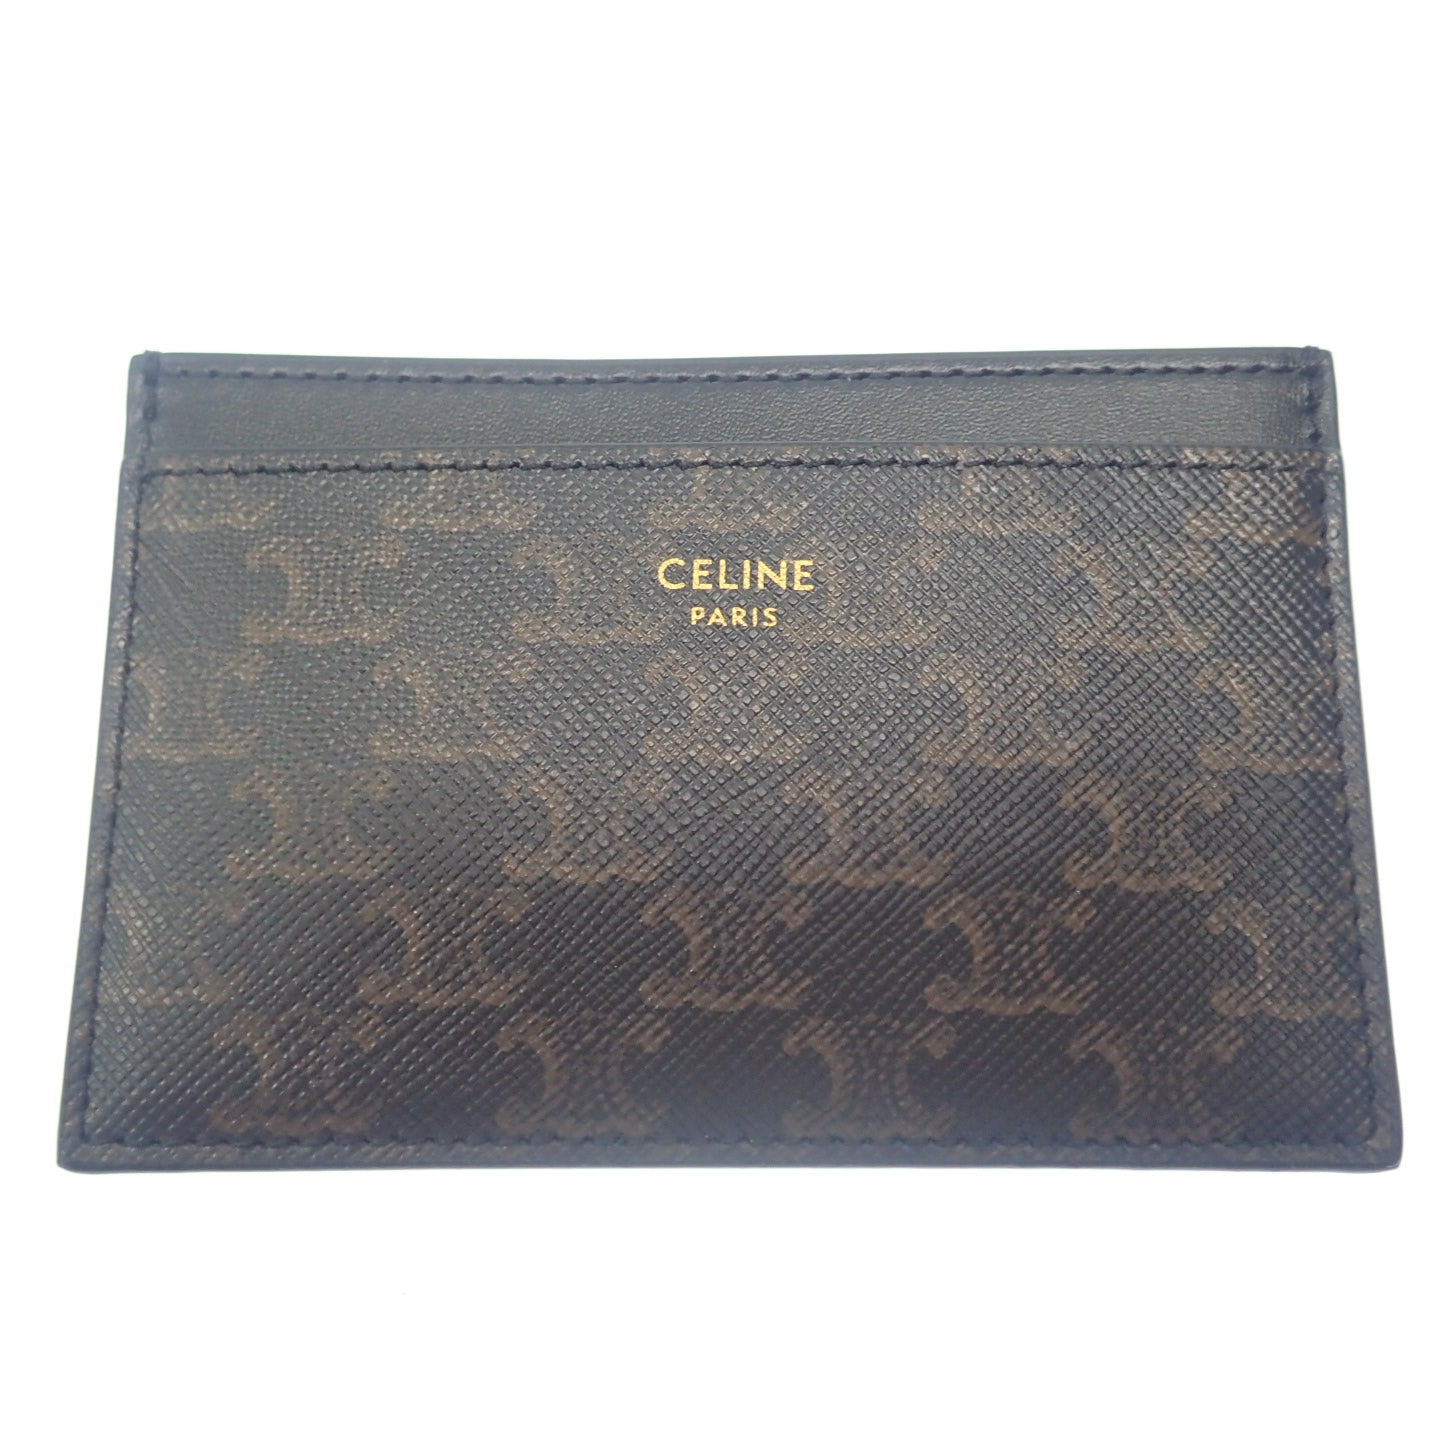 Very good condition ◆ Celine card case PVC Triomphe 10B702 CELINE [AFI18] 